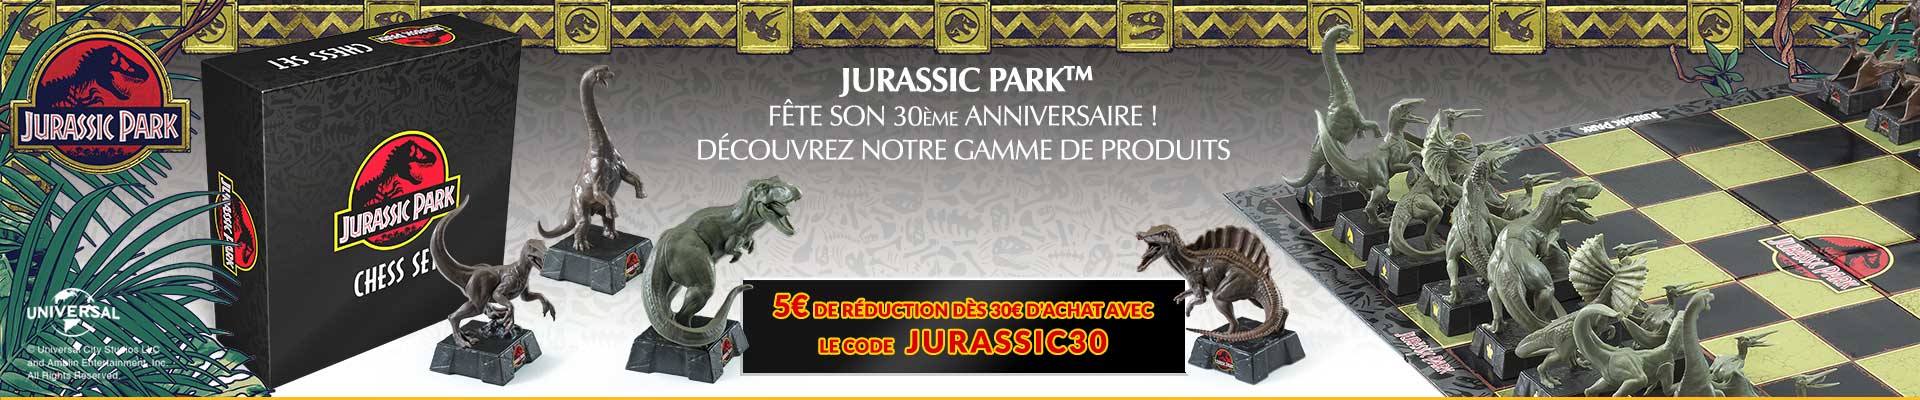 Anniversaire Jurassic Park ! title=